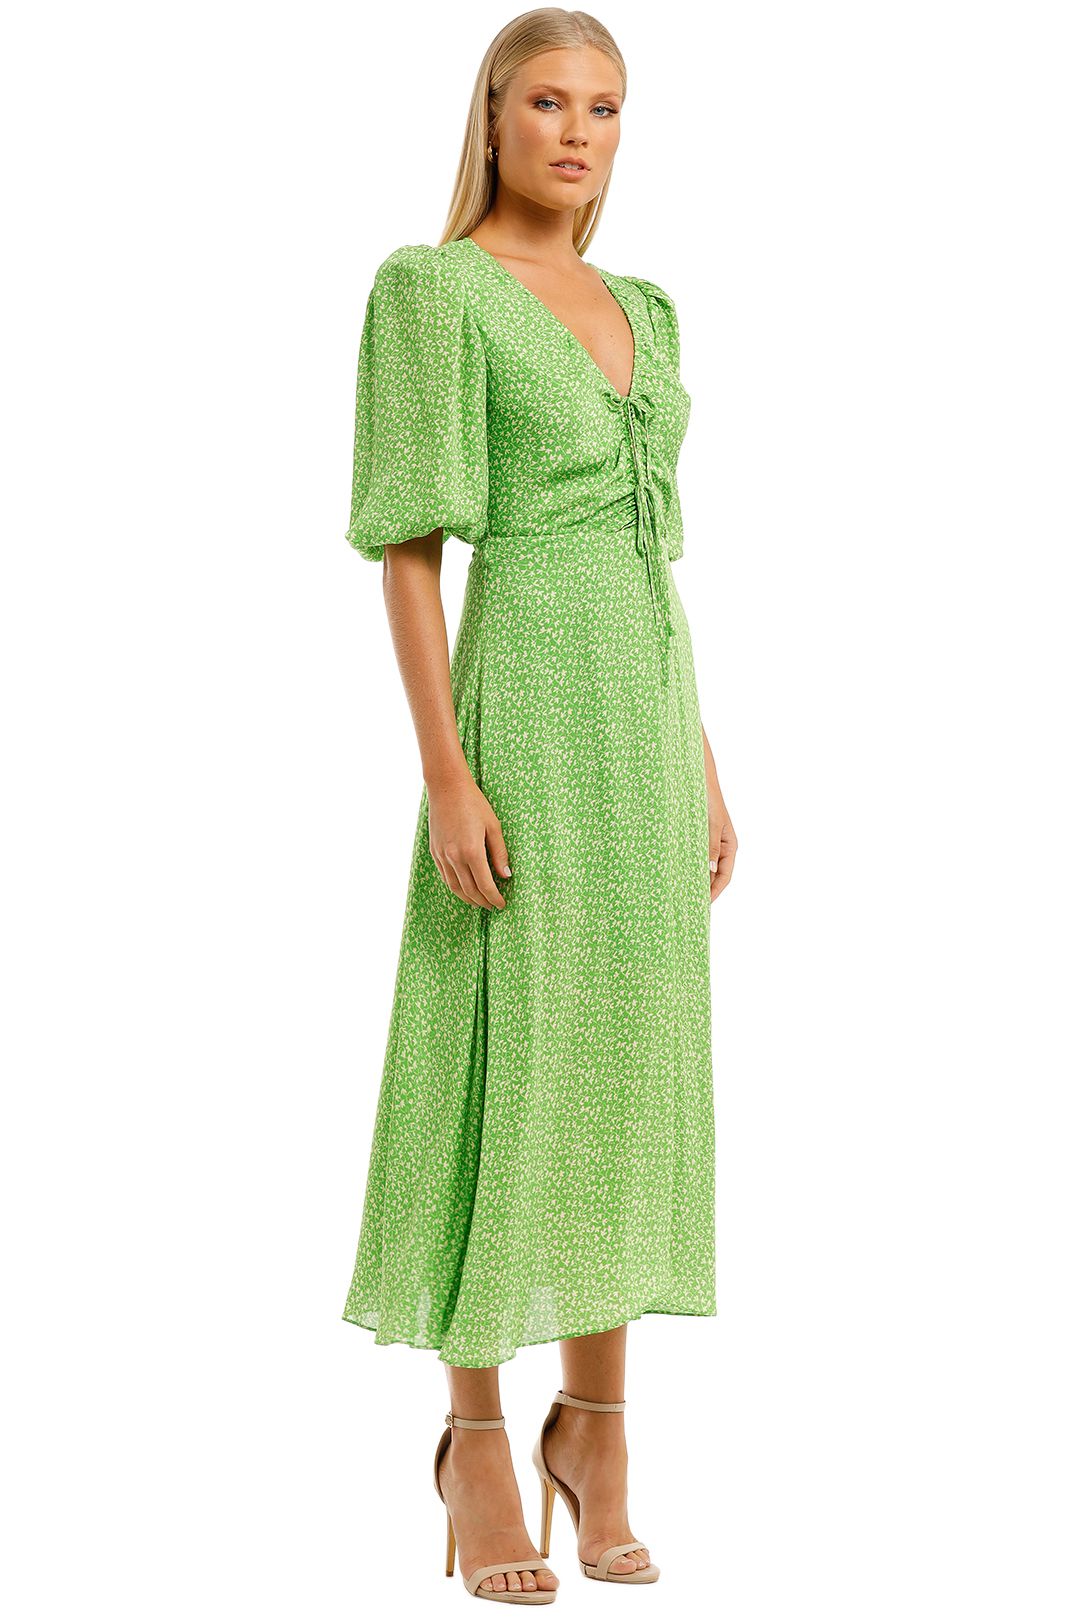 Danielle Dress in Green by Nicholas for Rent | GlamCorner